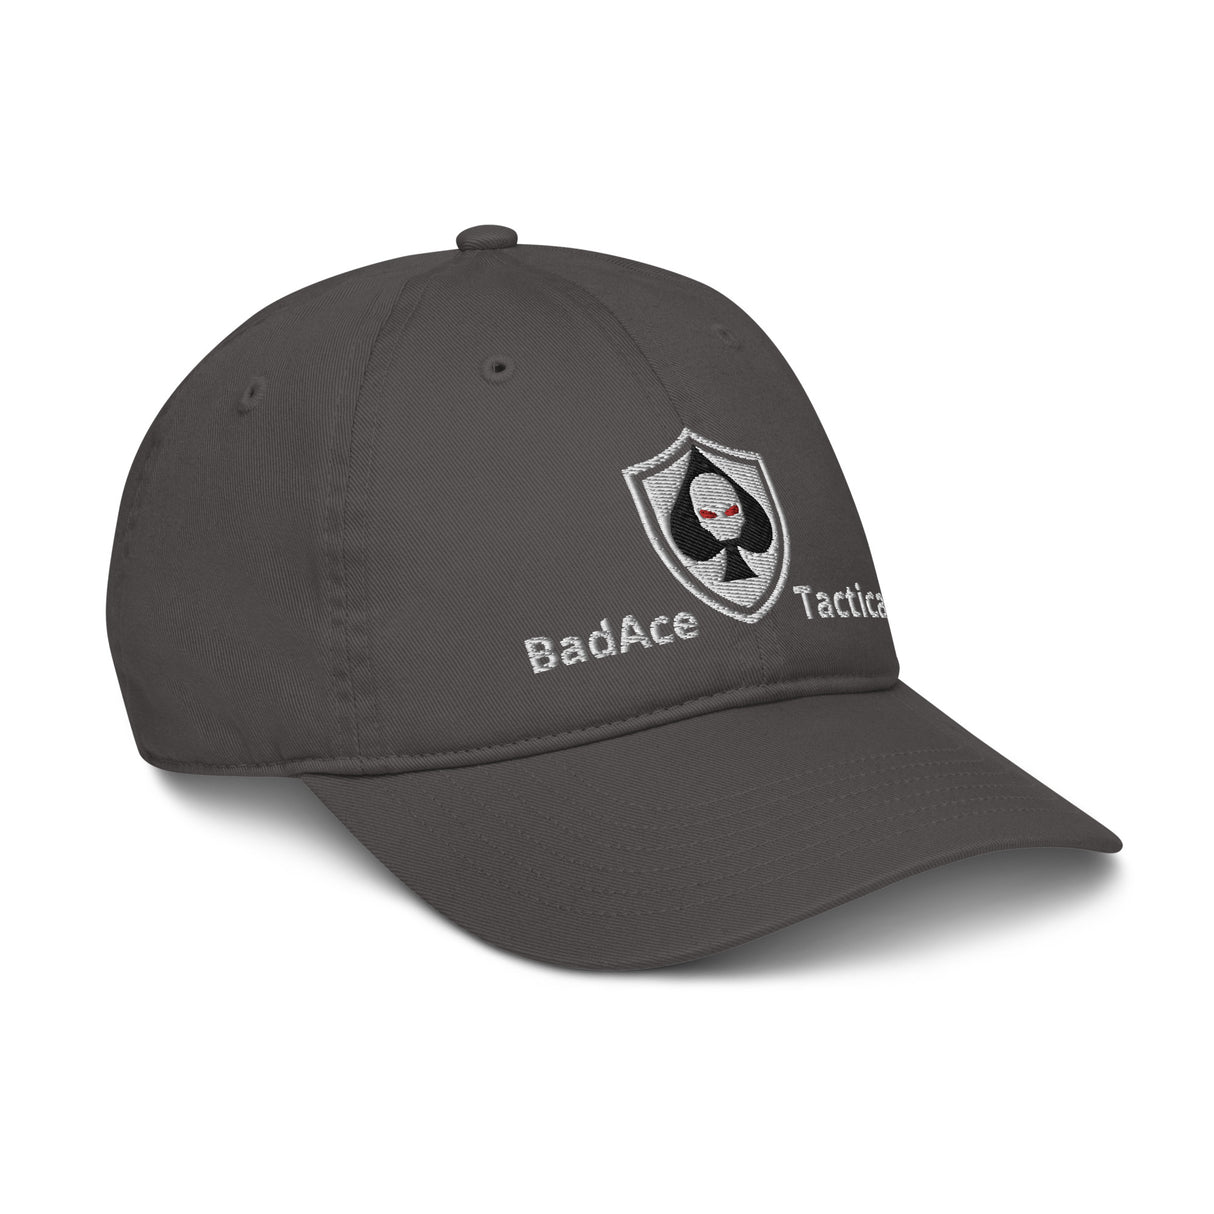 BadAce Tactical organic dad hat